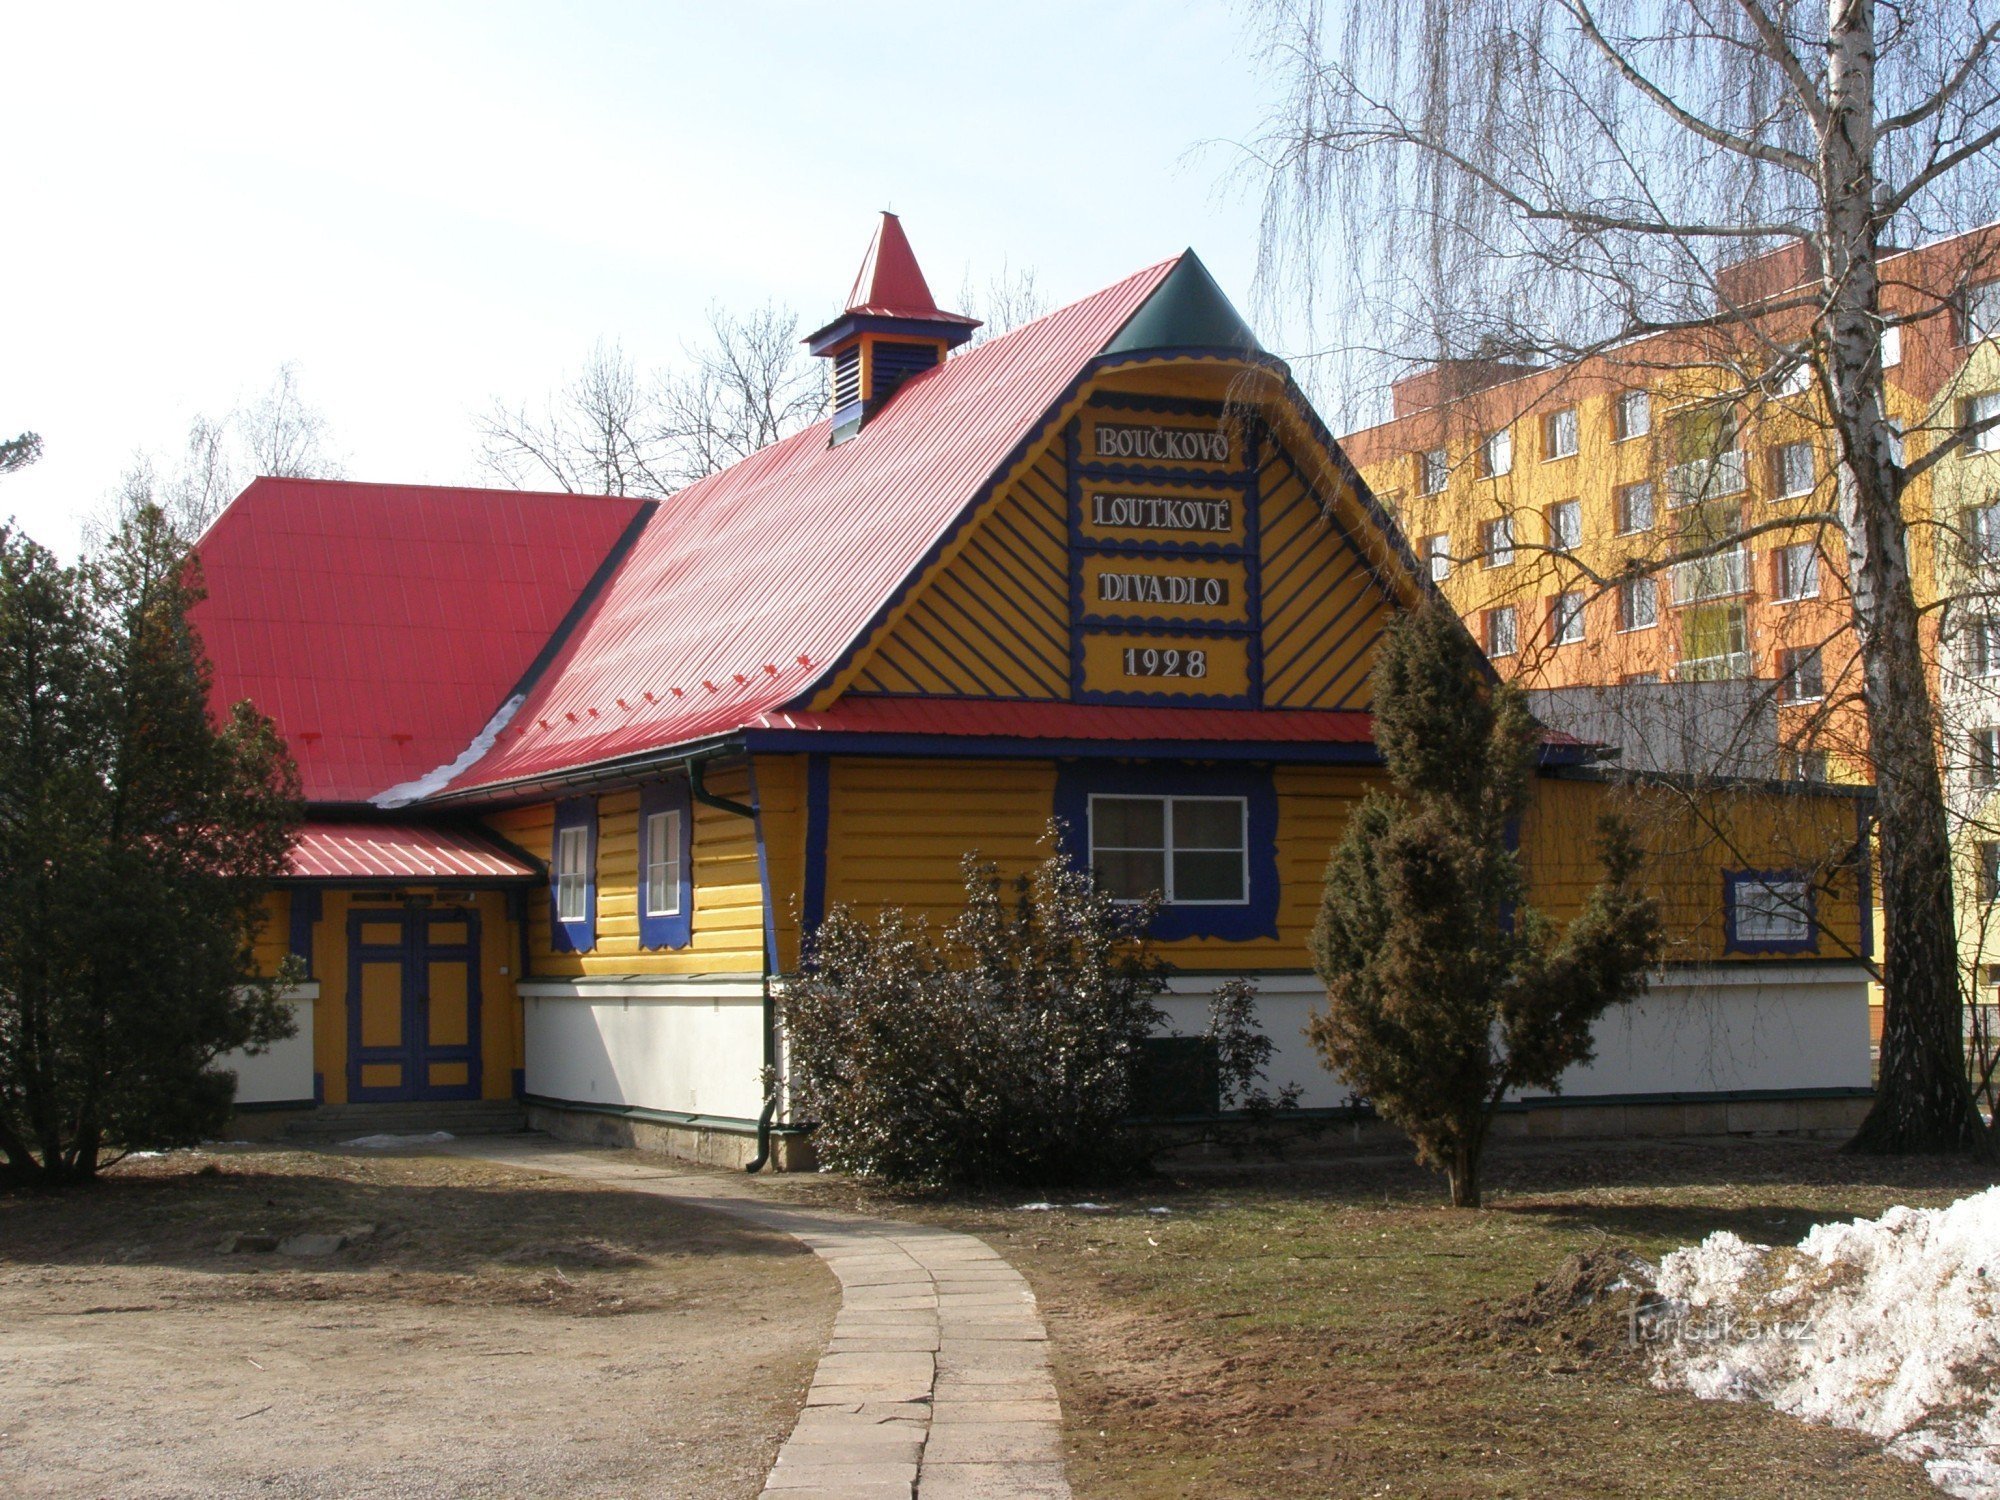 Jaroměř - nhà hát múa rối của Boučko